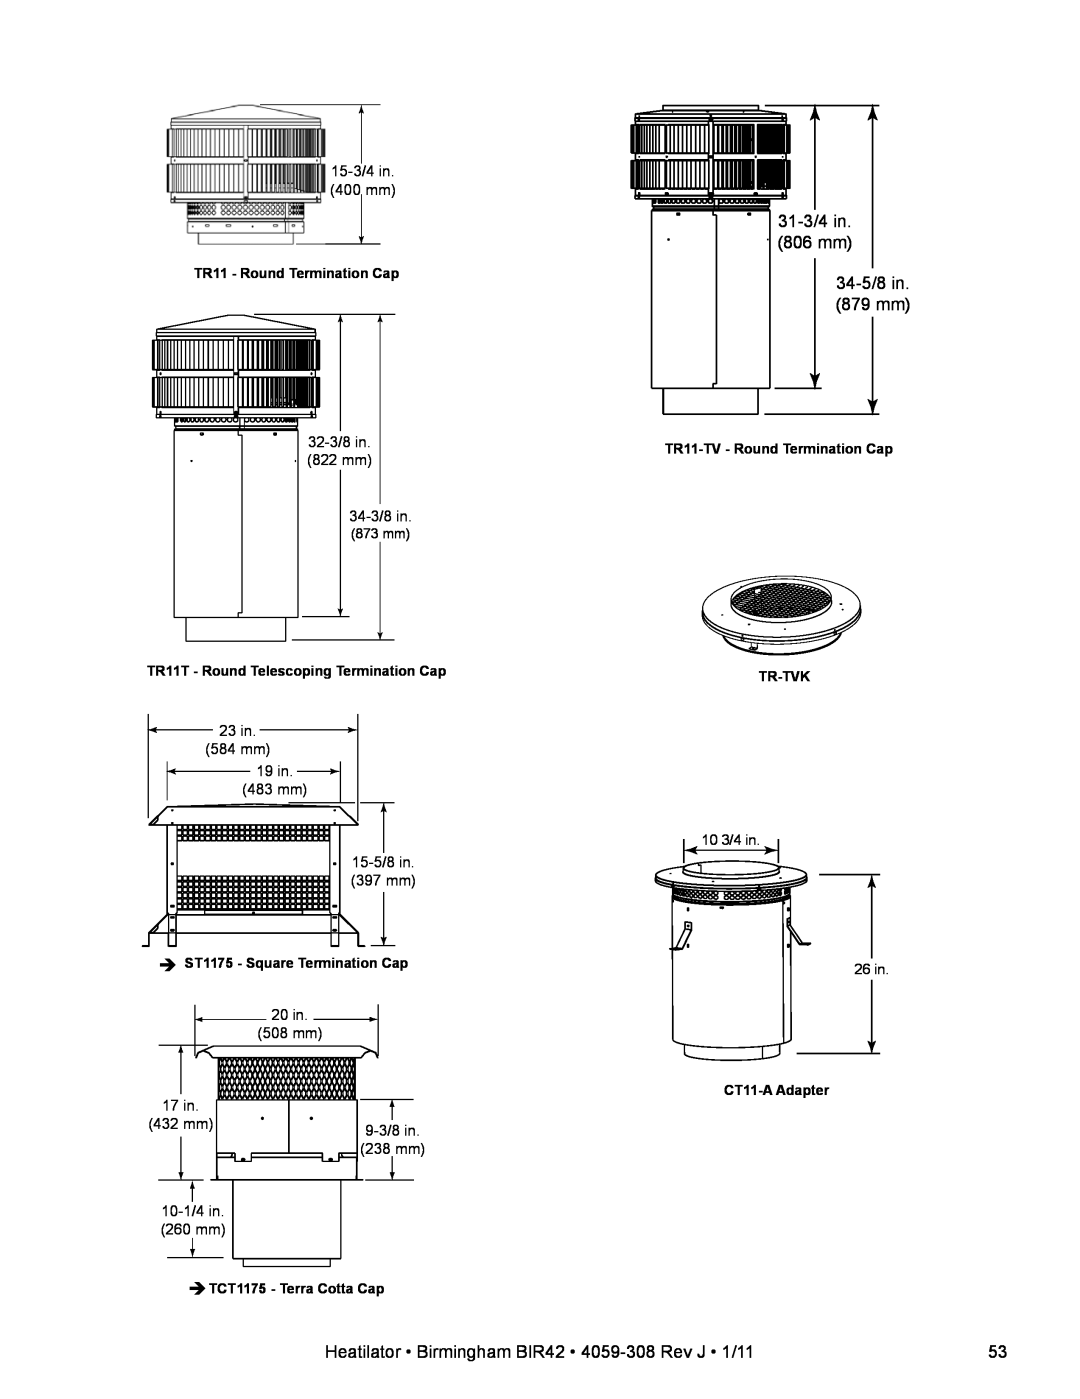 Heatiator BIR42 owner manual 31-3/4in 806 mm 34-5/8in 879 mm, 15-3/4in 400 mm 